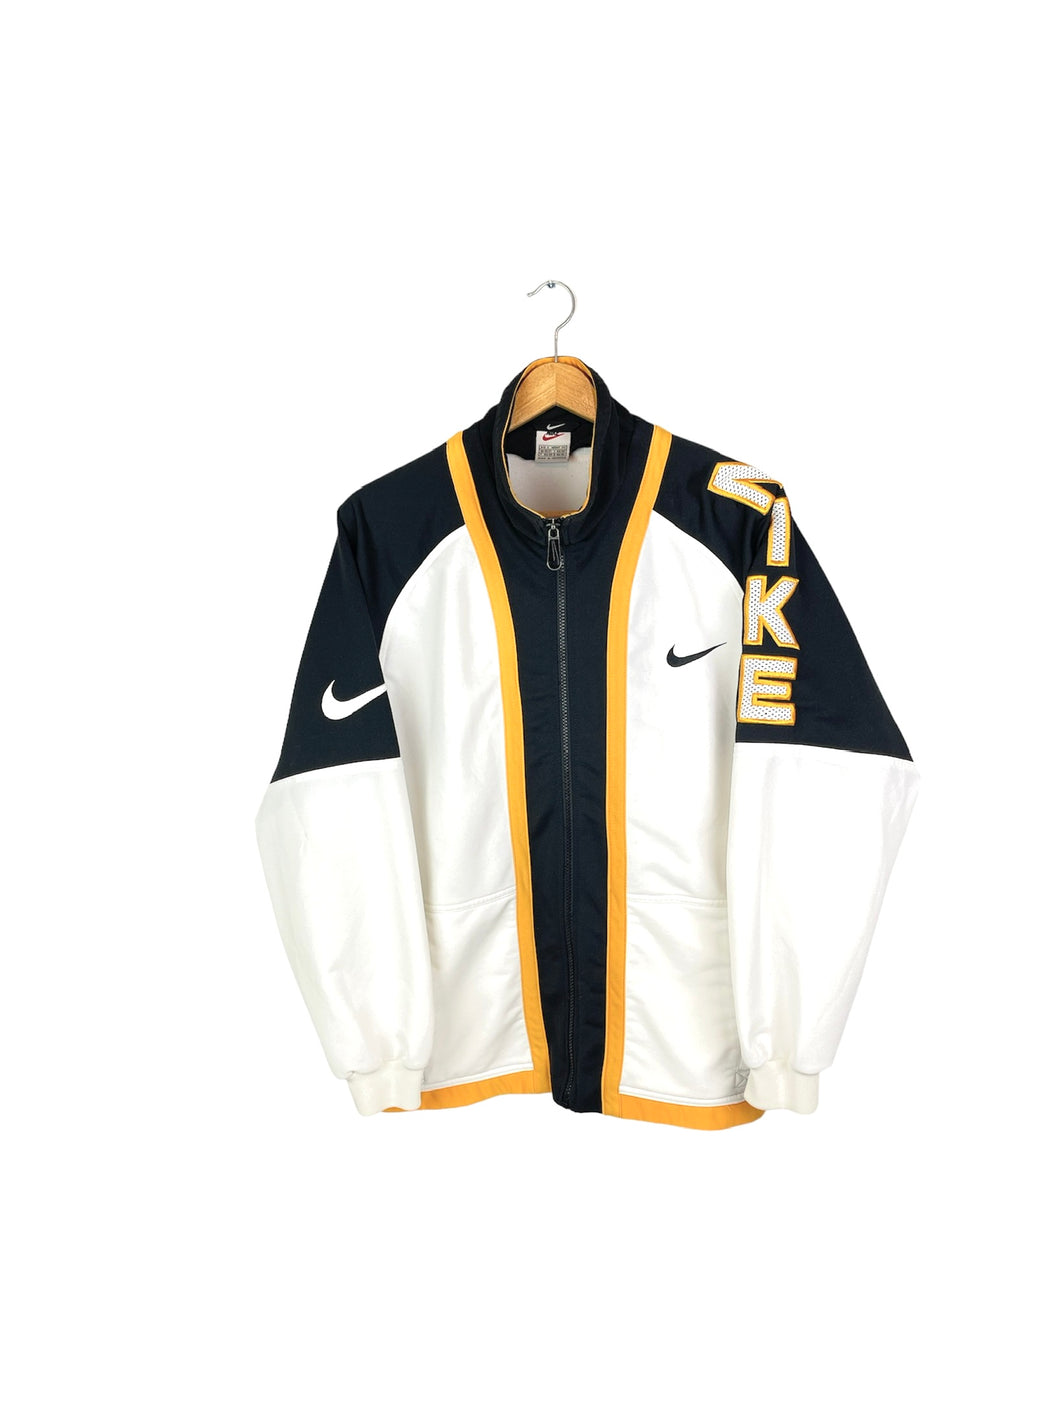 Nike Jacket - Medium